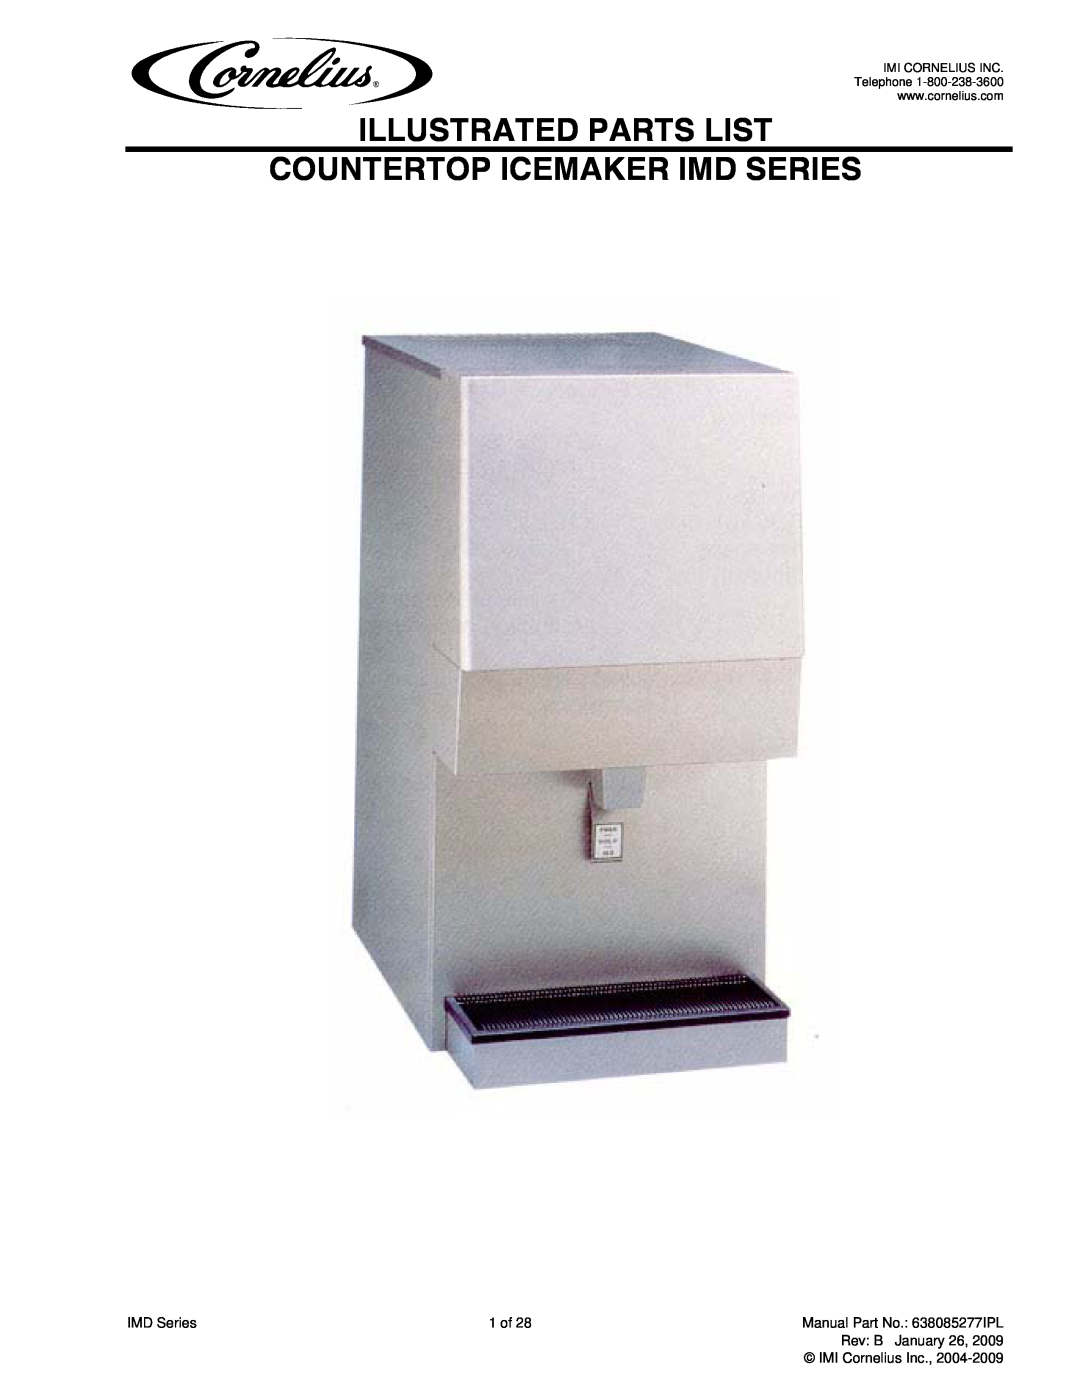 Cornelius IMD300-30, IMD600-30, IMD600-90, IMD300-15 manual Illustrated Parts List, Countertop Icemaker Imd Series 